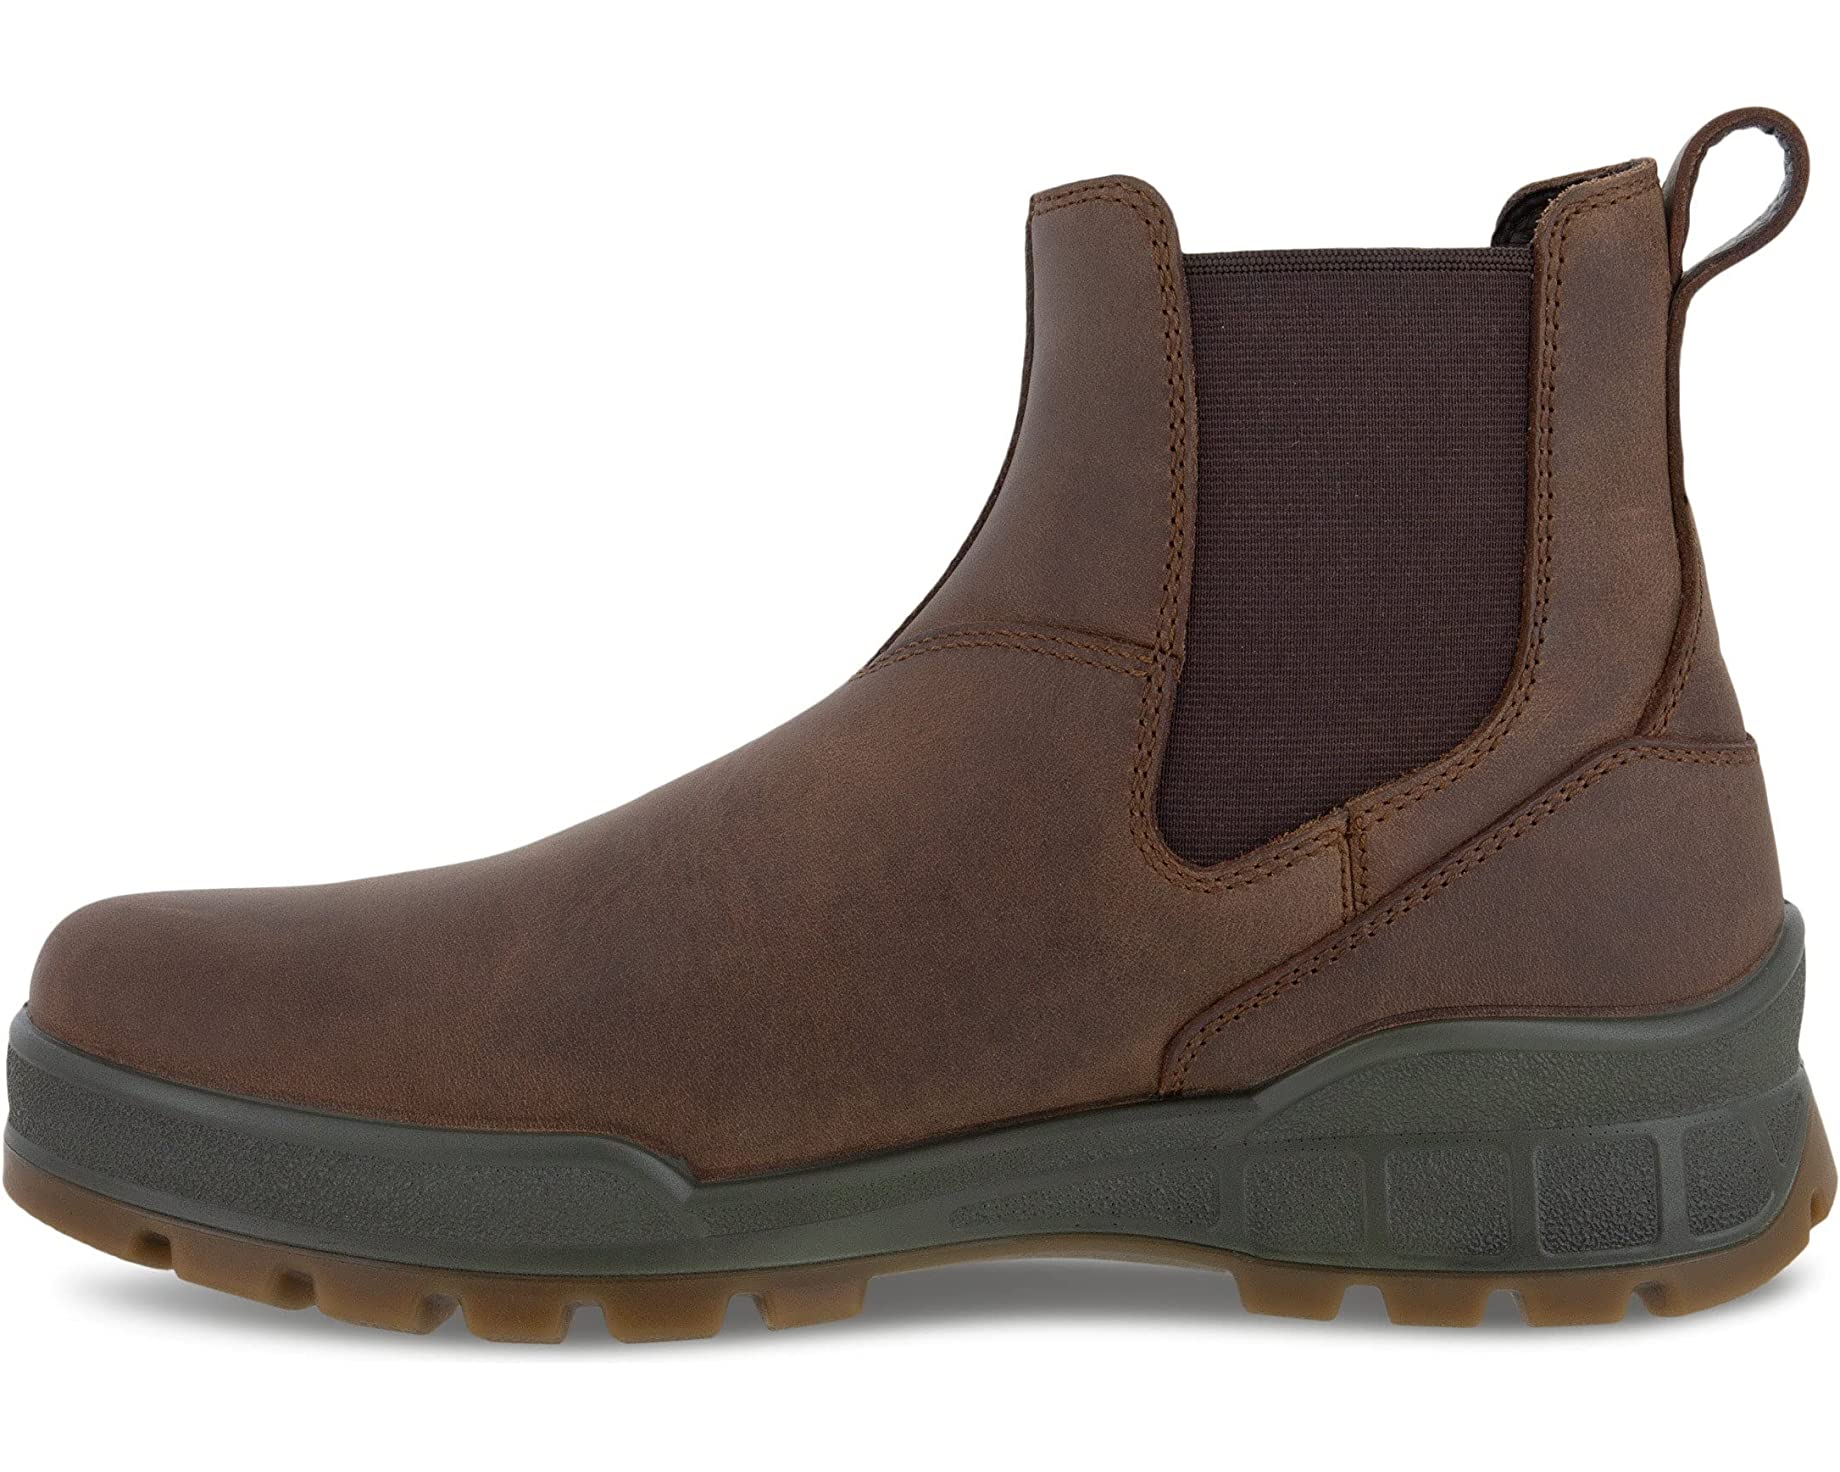 Ботинки Track 25 Hydromax Water Resistant Chelsea Boot ECCO, коричневый ботинки челси alpinestars turnstone коричневый